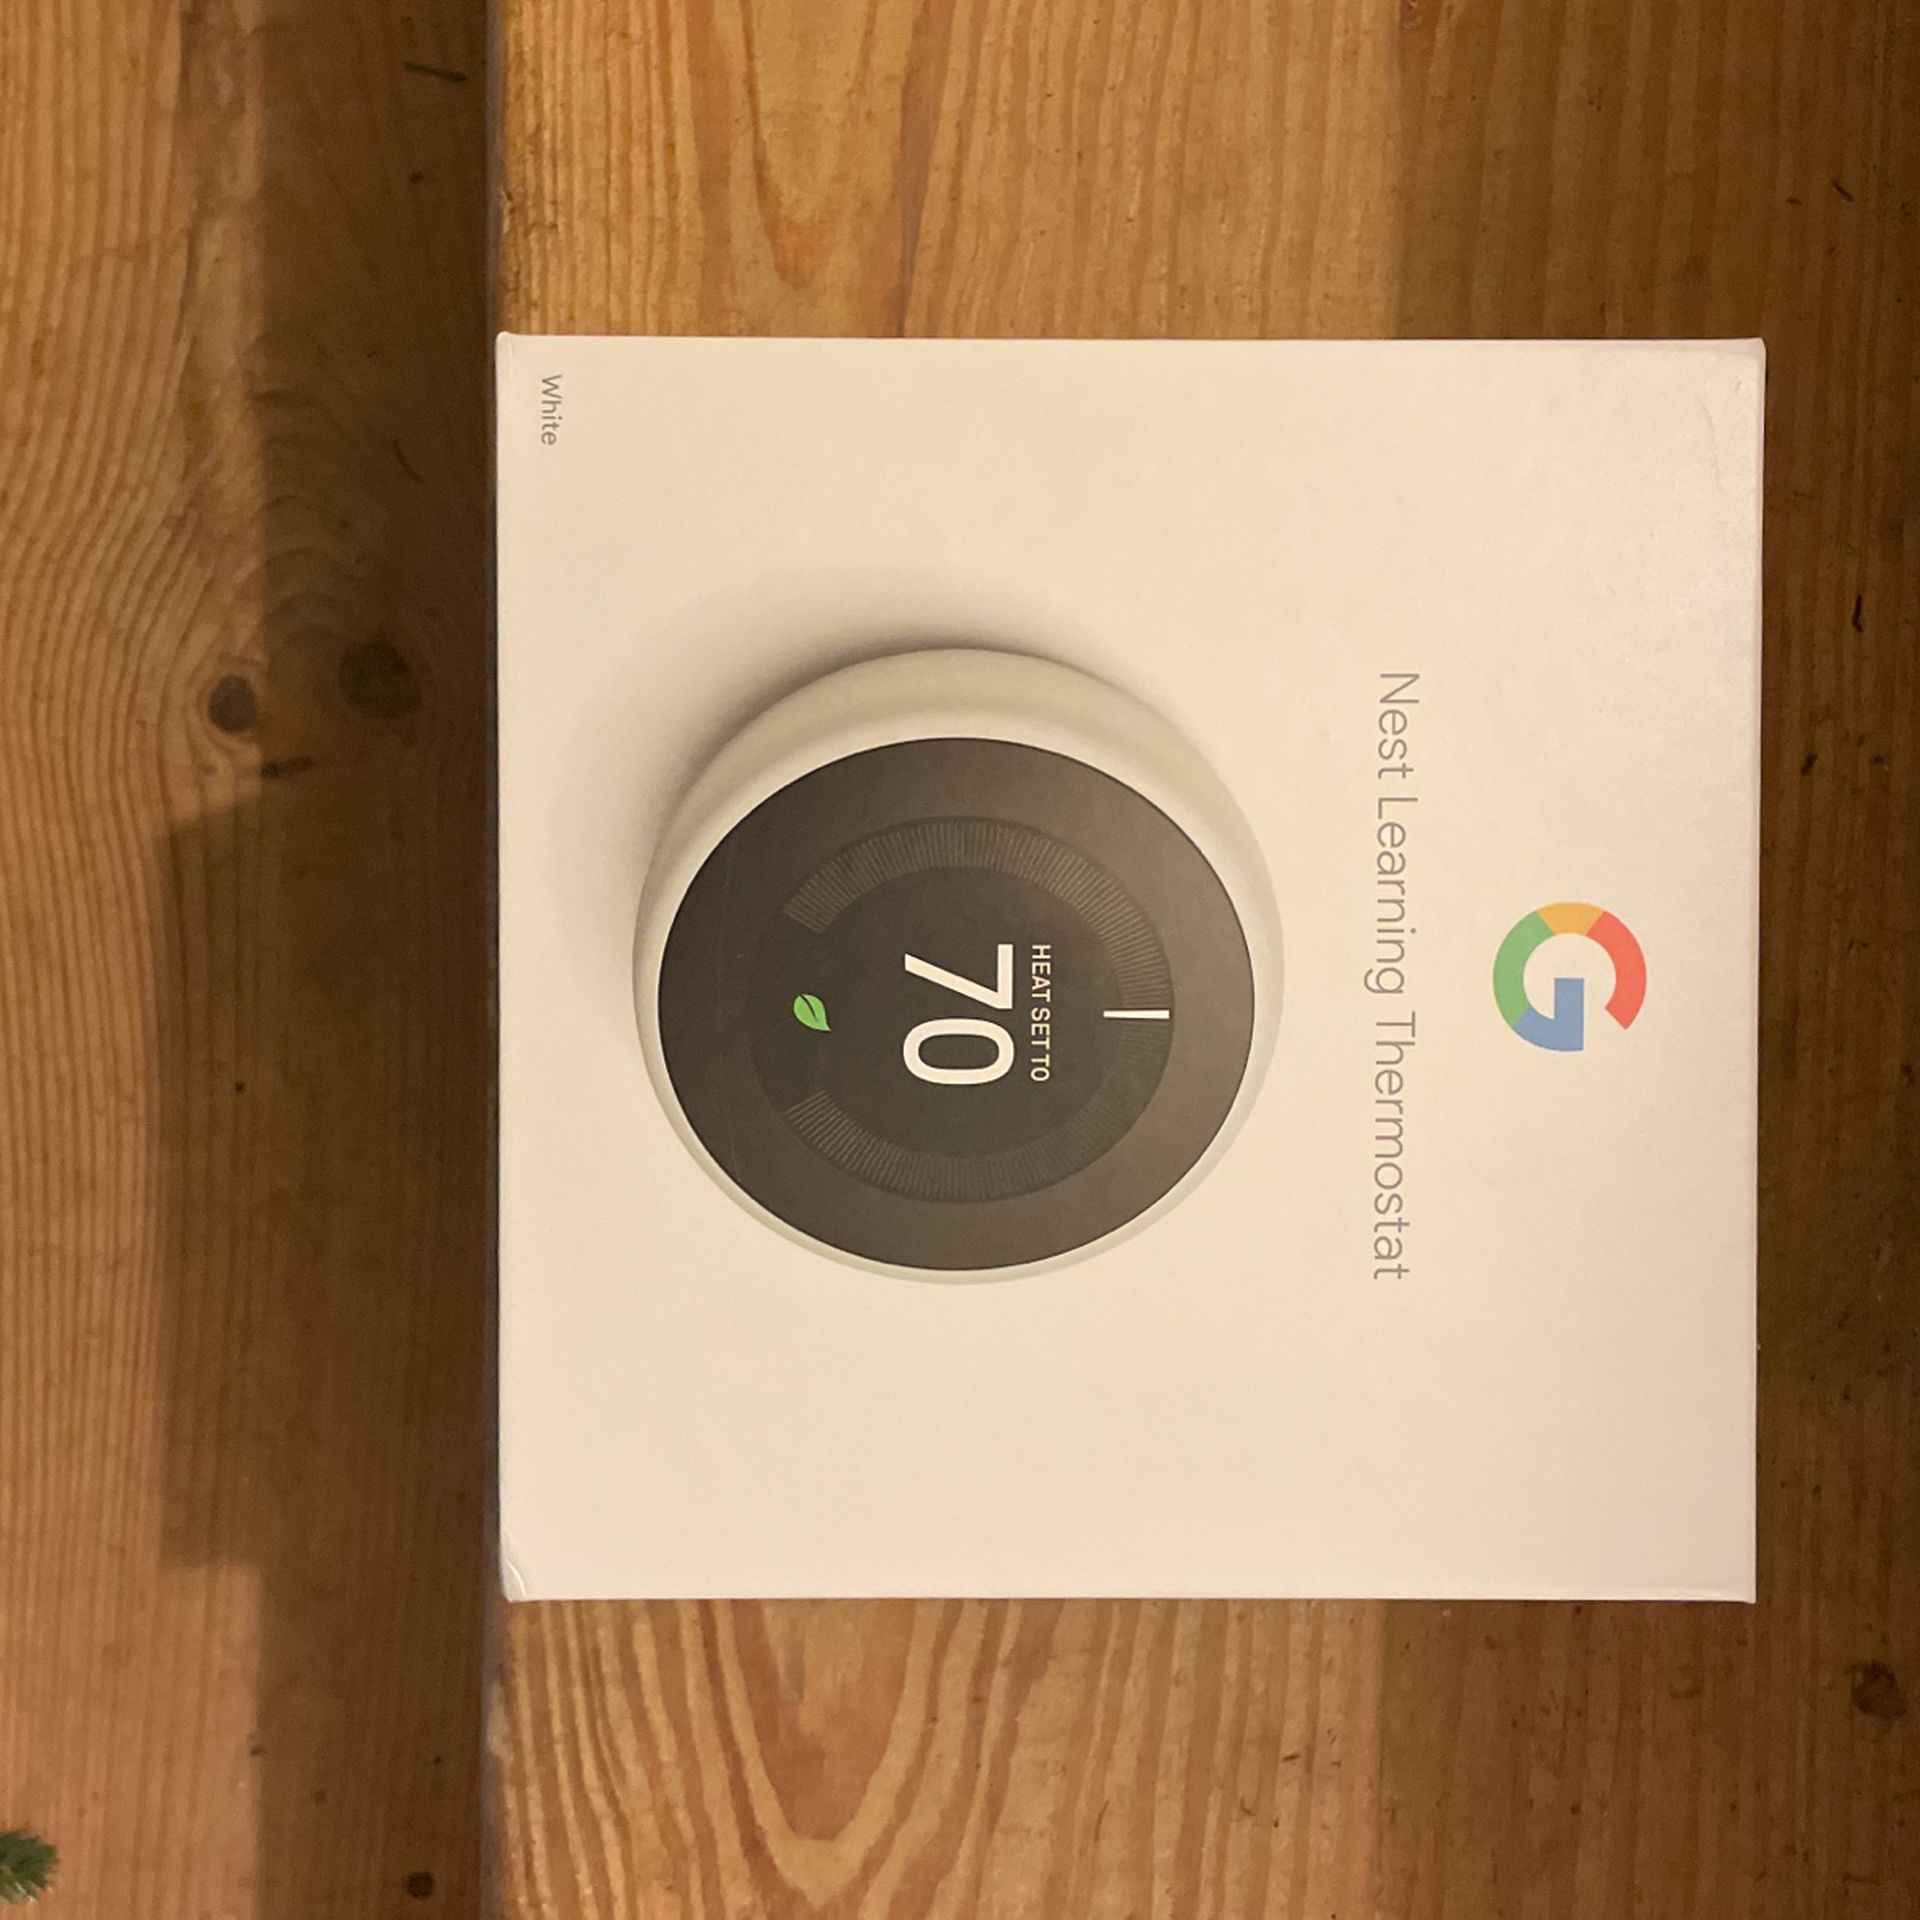 4 Google Nest Thermostats Factory Sealed